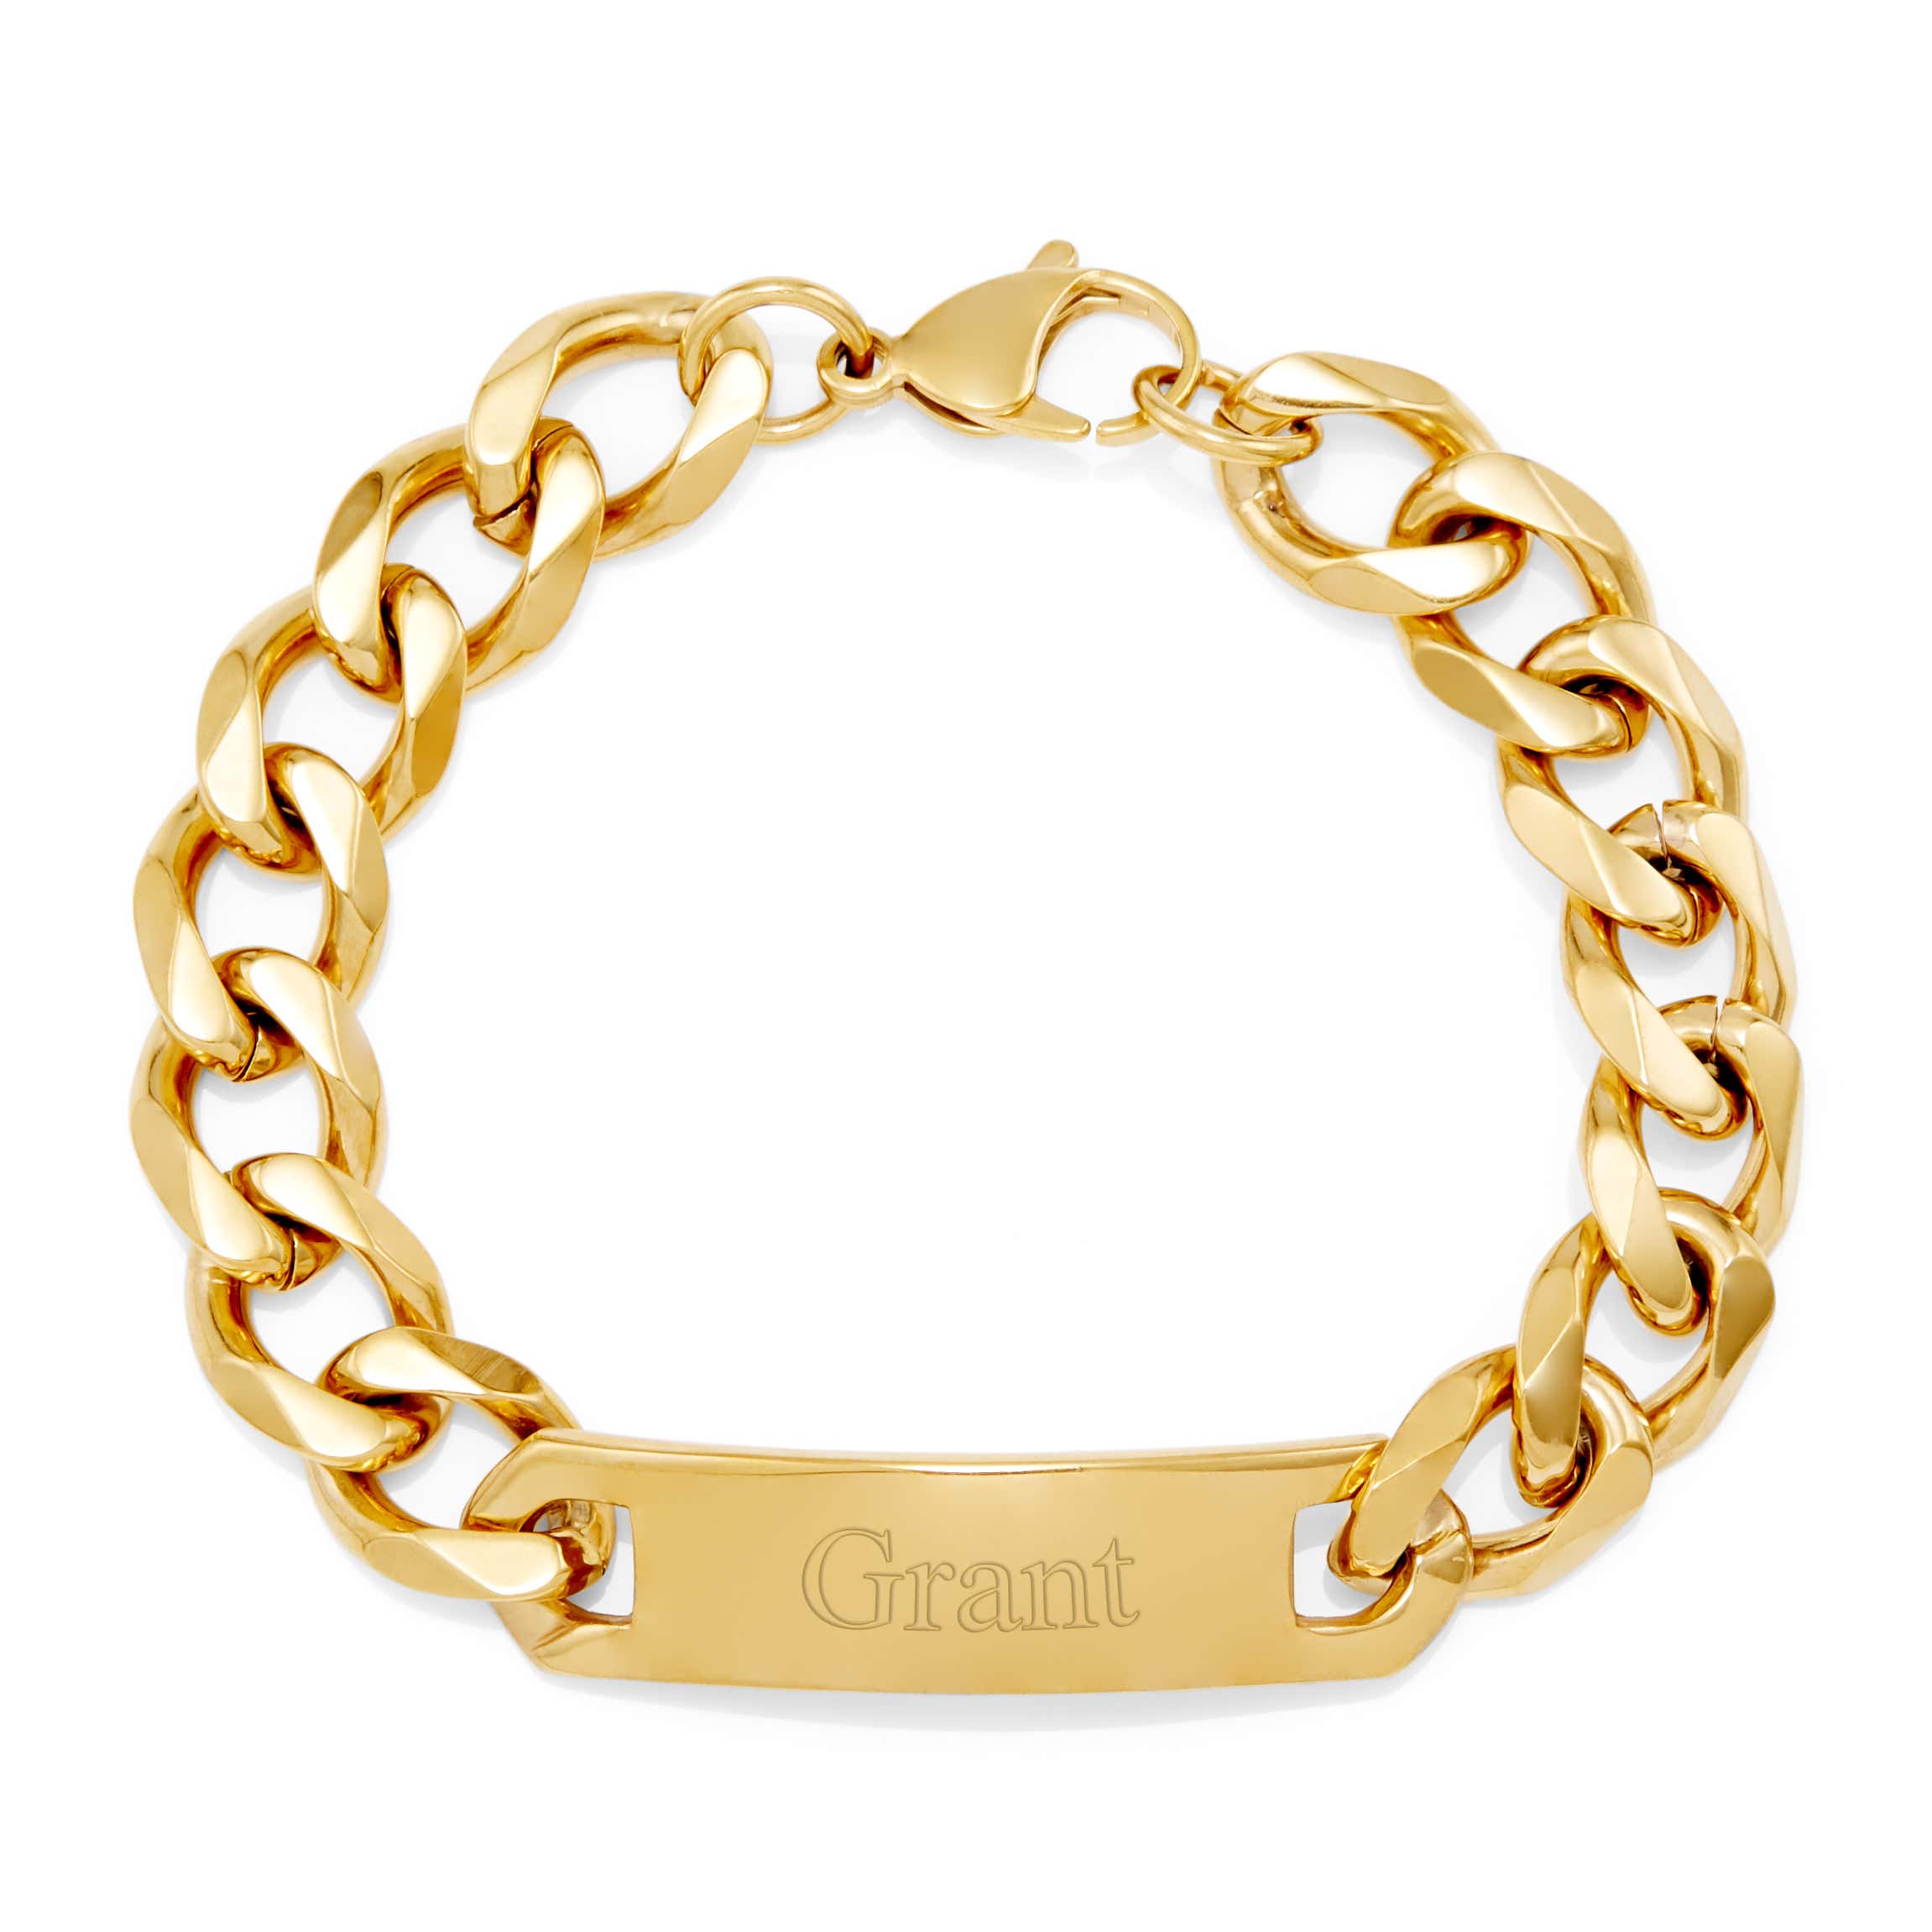 Monogram Bracelet - Engraved Bracelet - Gift For Mom - Personalized Jewelry  Gift